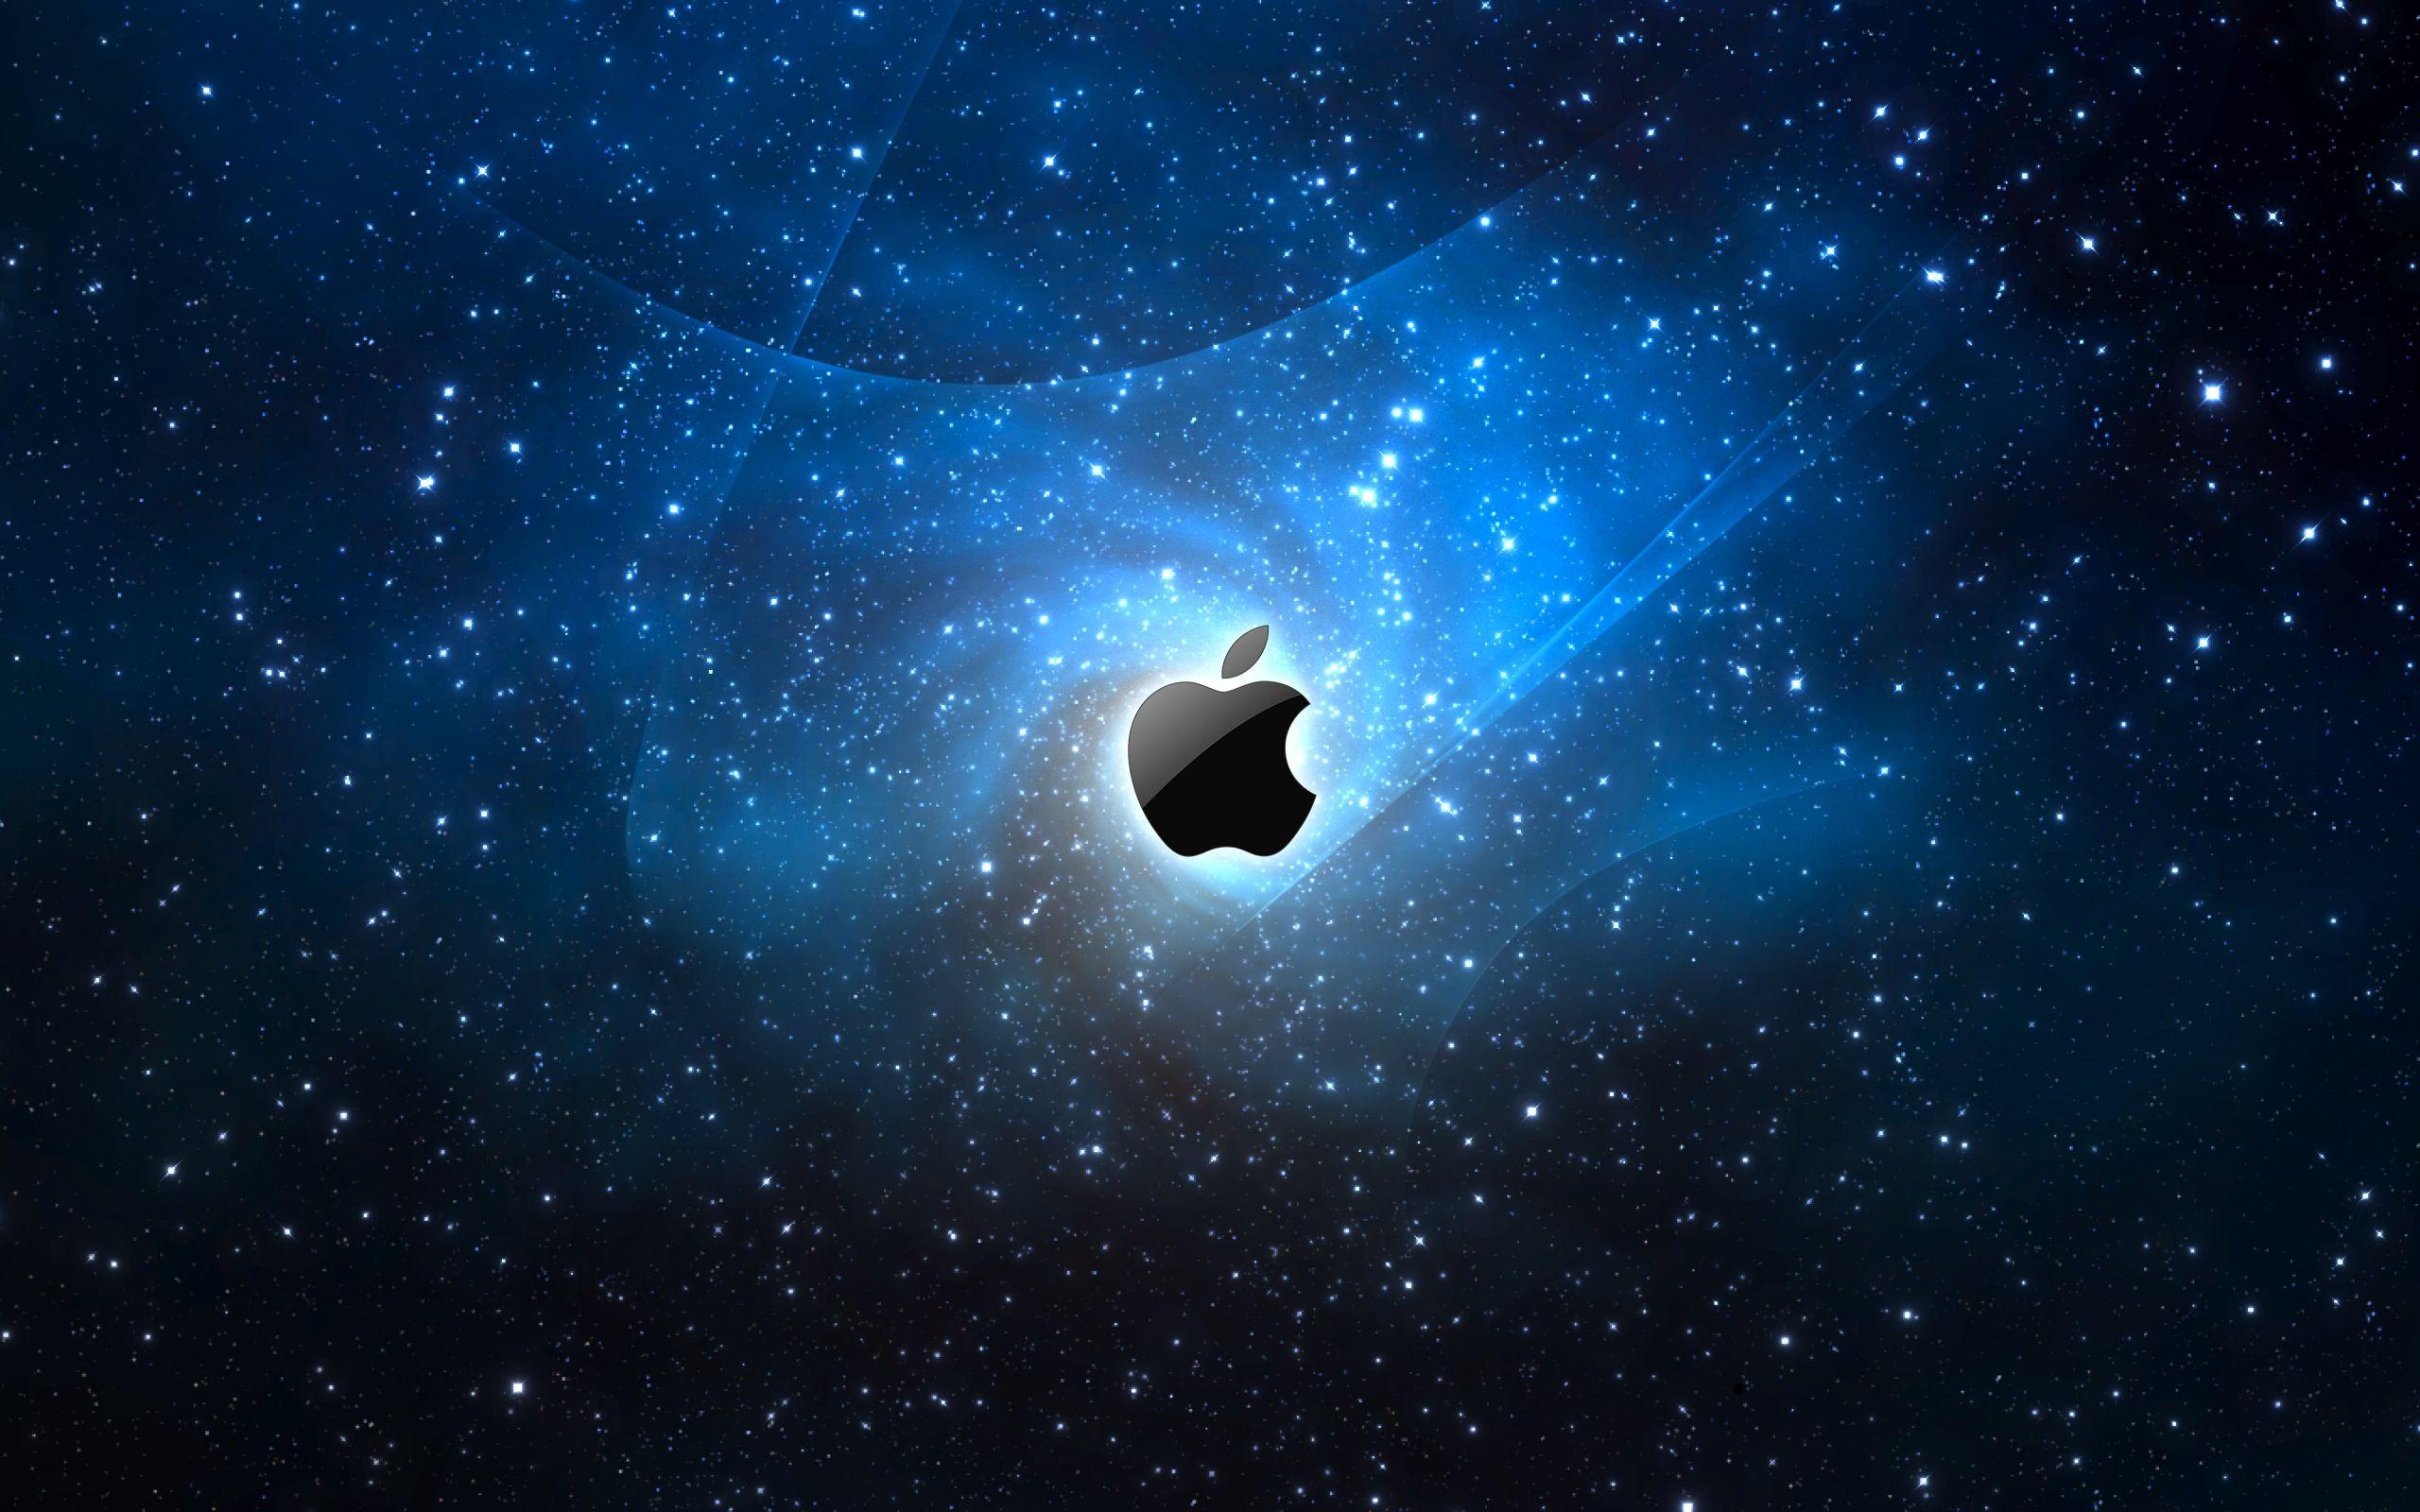 Space Apple logo wallpaper. Space Apple logo